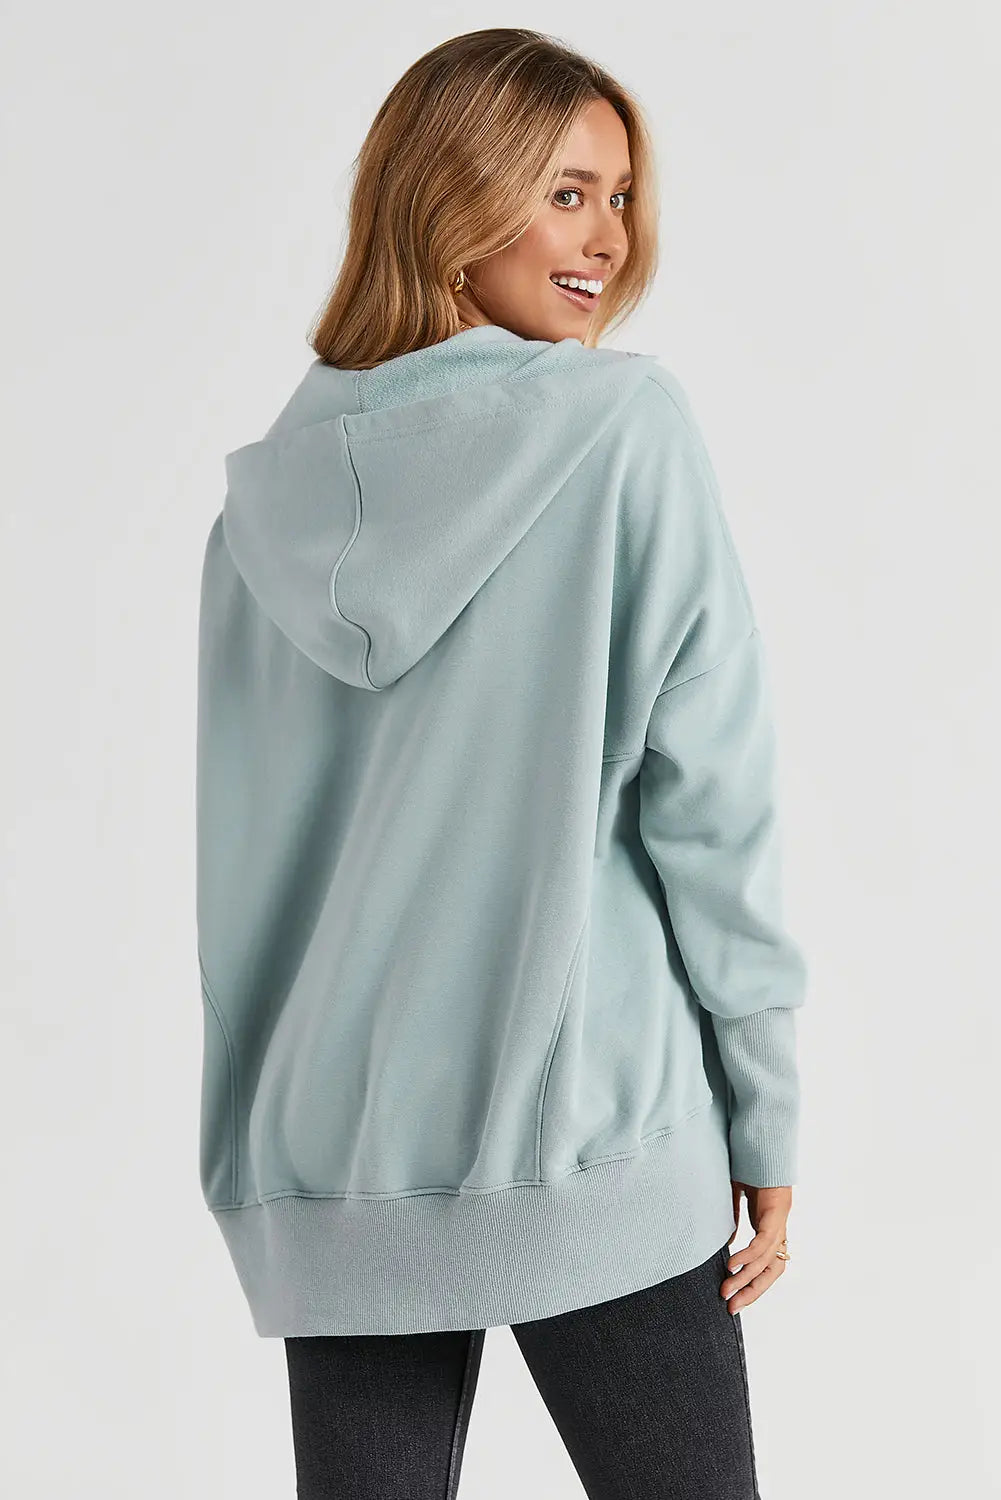 Turquoise batwing sleeve pocketed henley hoodie - sweatshirts & hoodies